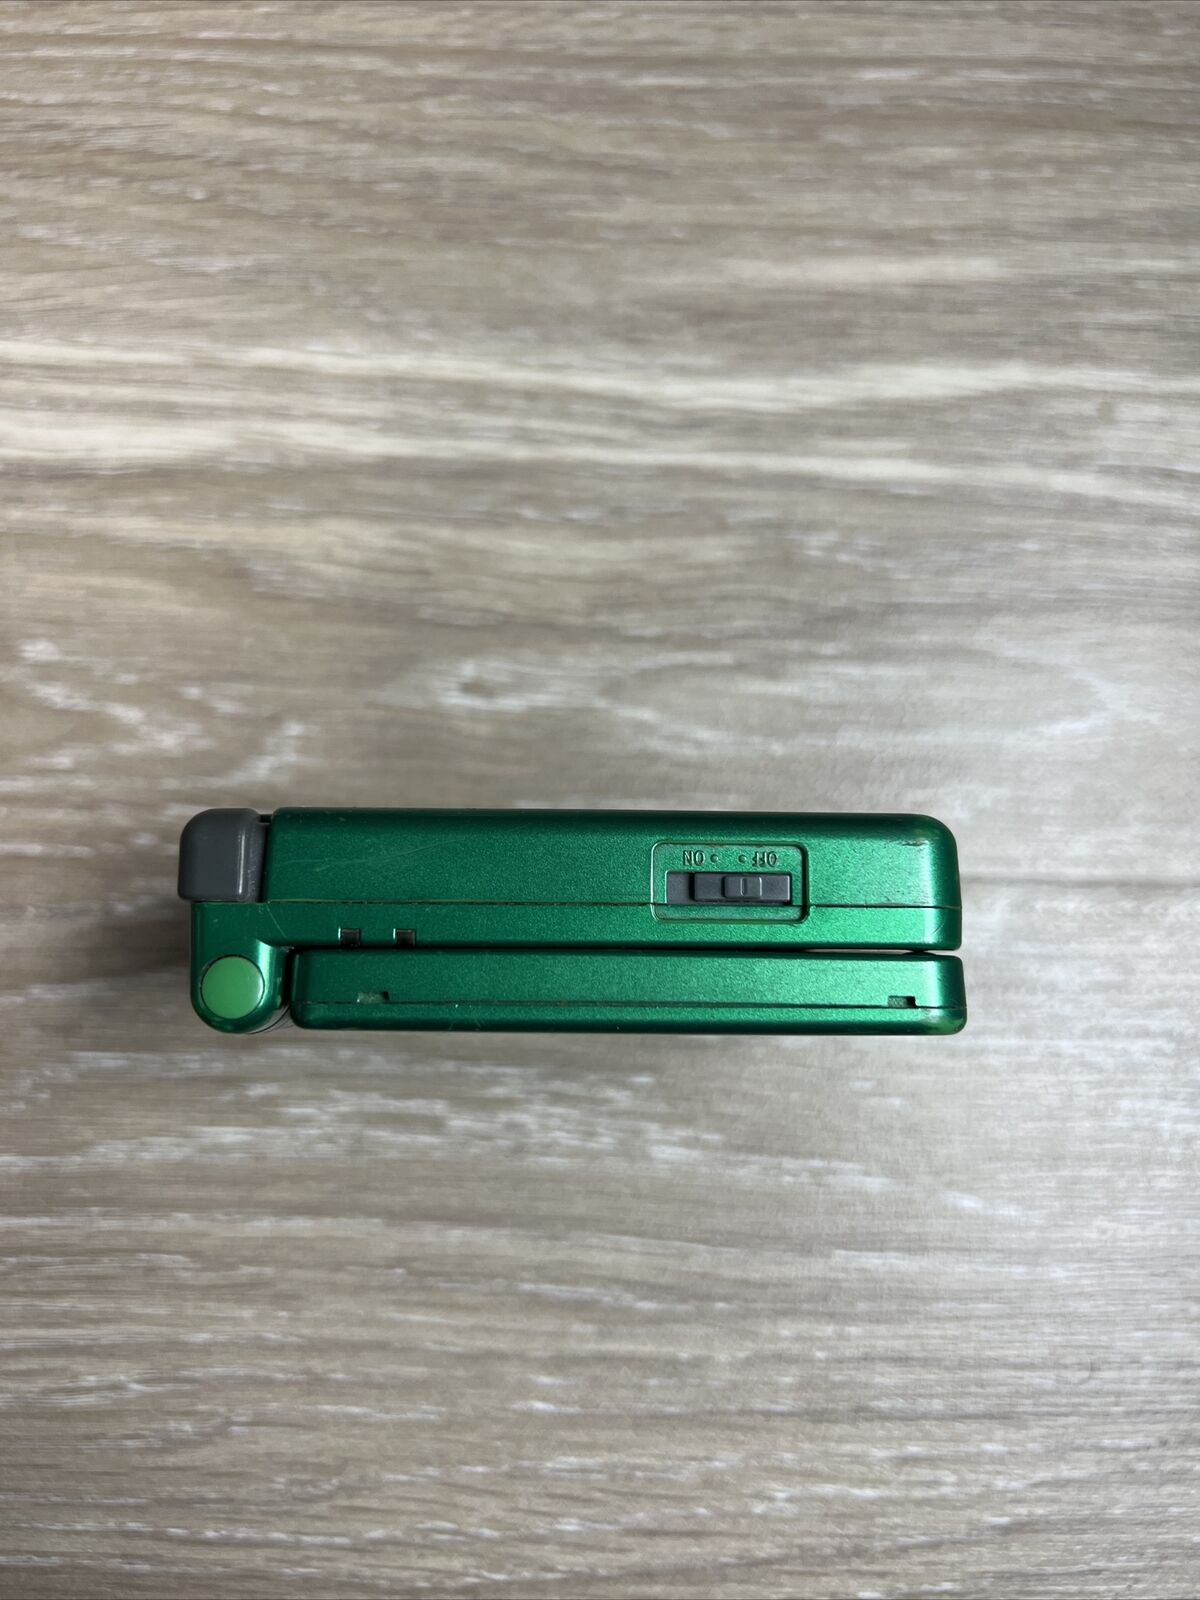 Game Boy Advance SP Green